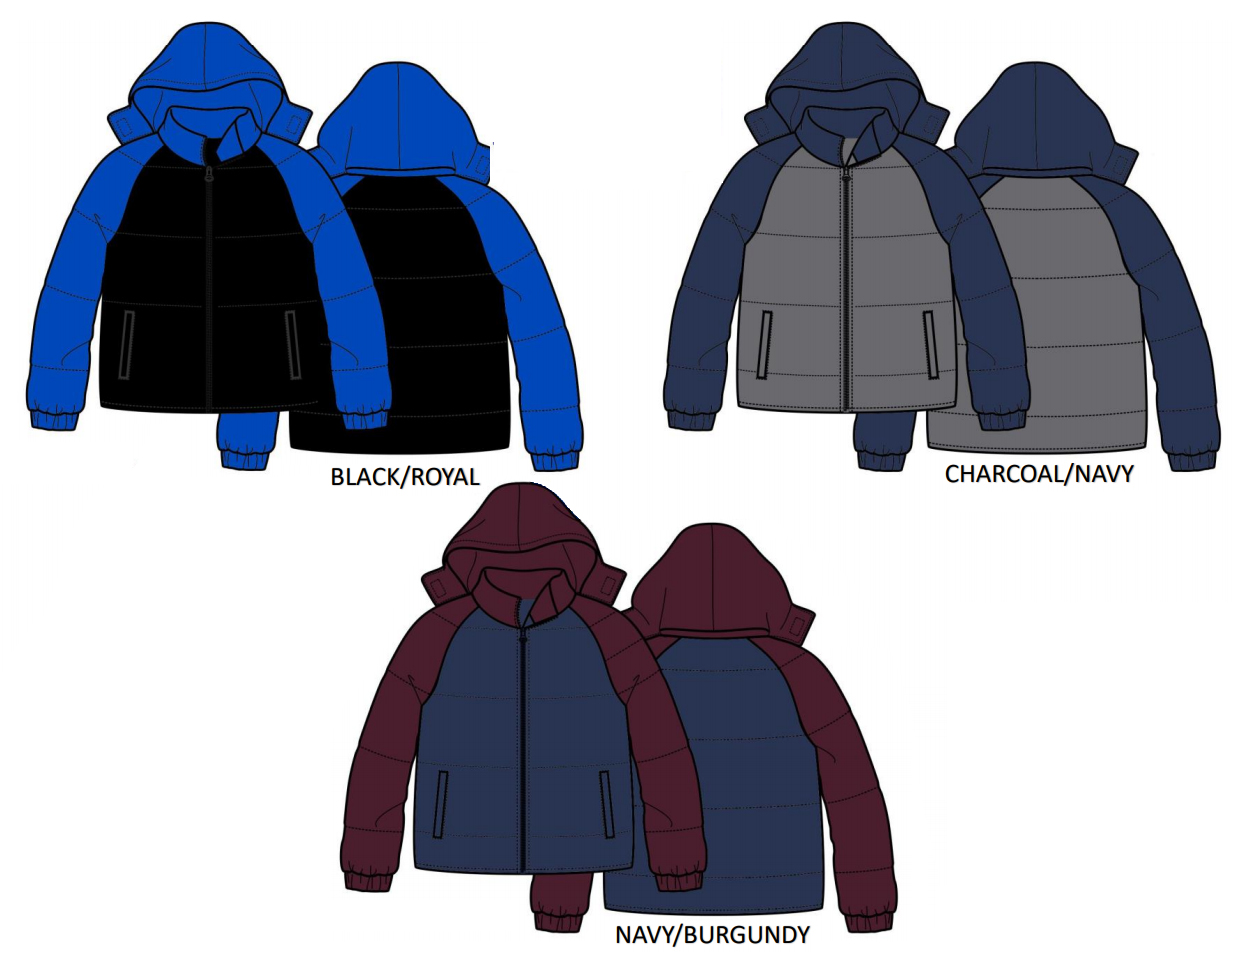 Boy's & Girl's WINTER Bubble Ski Jackets w/ Detachable Hood - Sizes Small-XL - Choose Your Color(s)